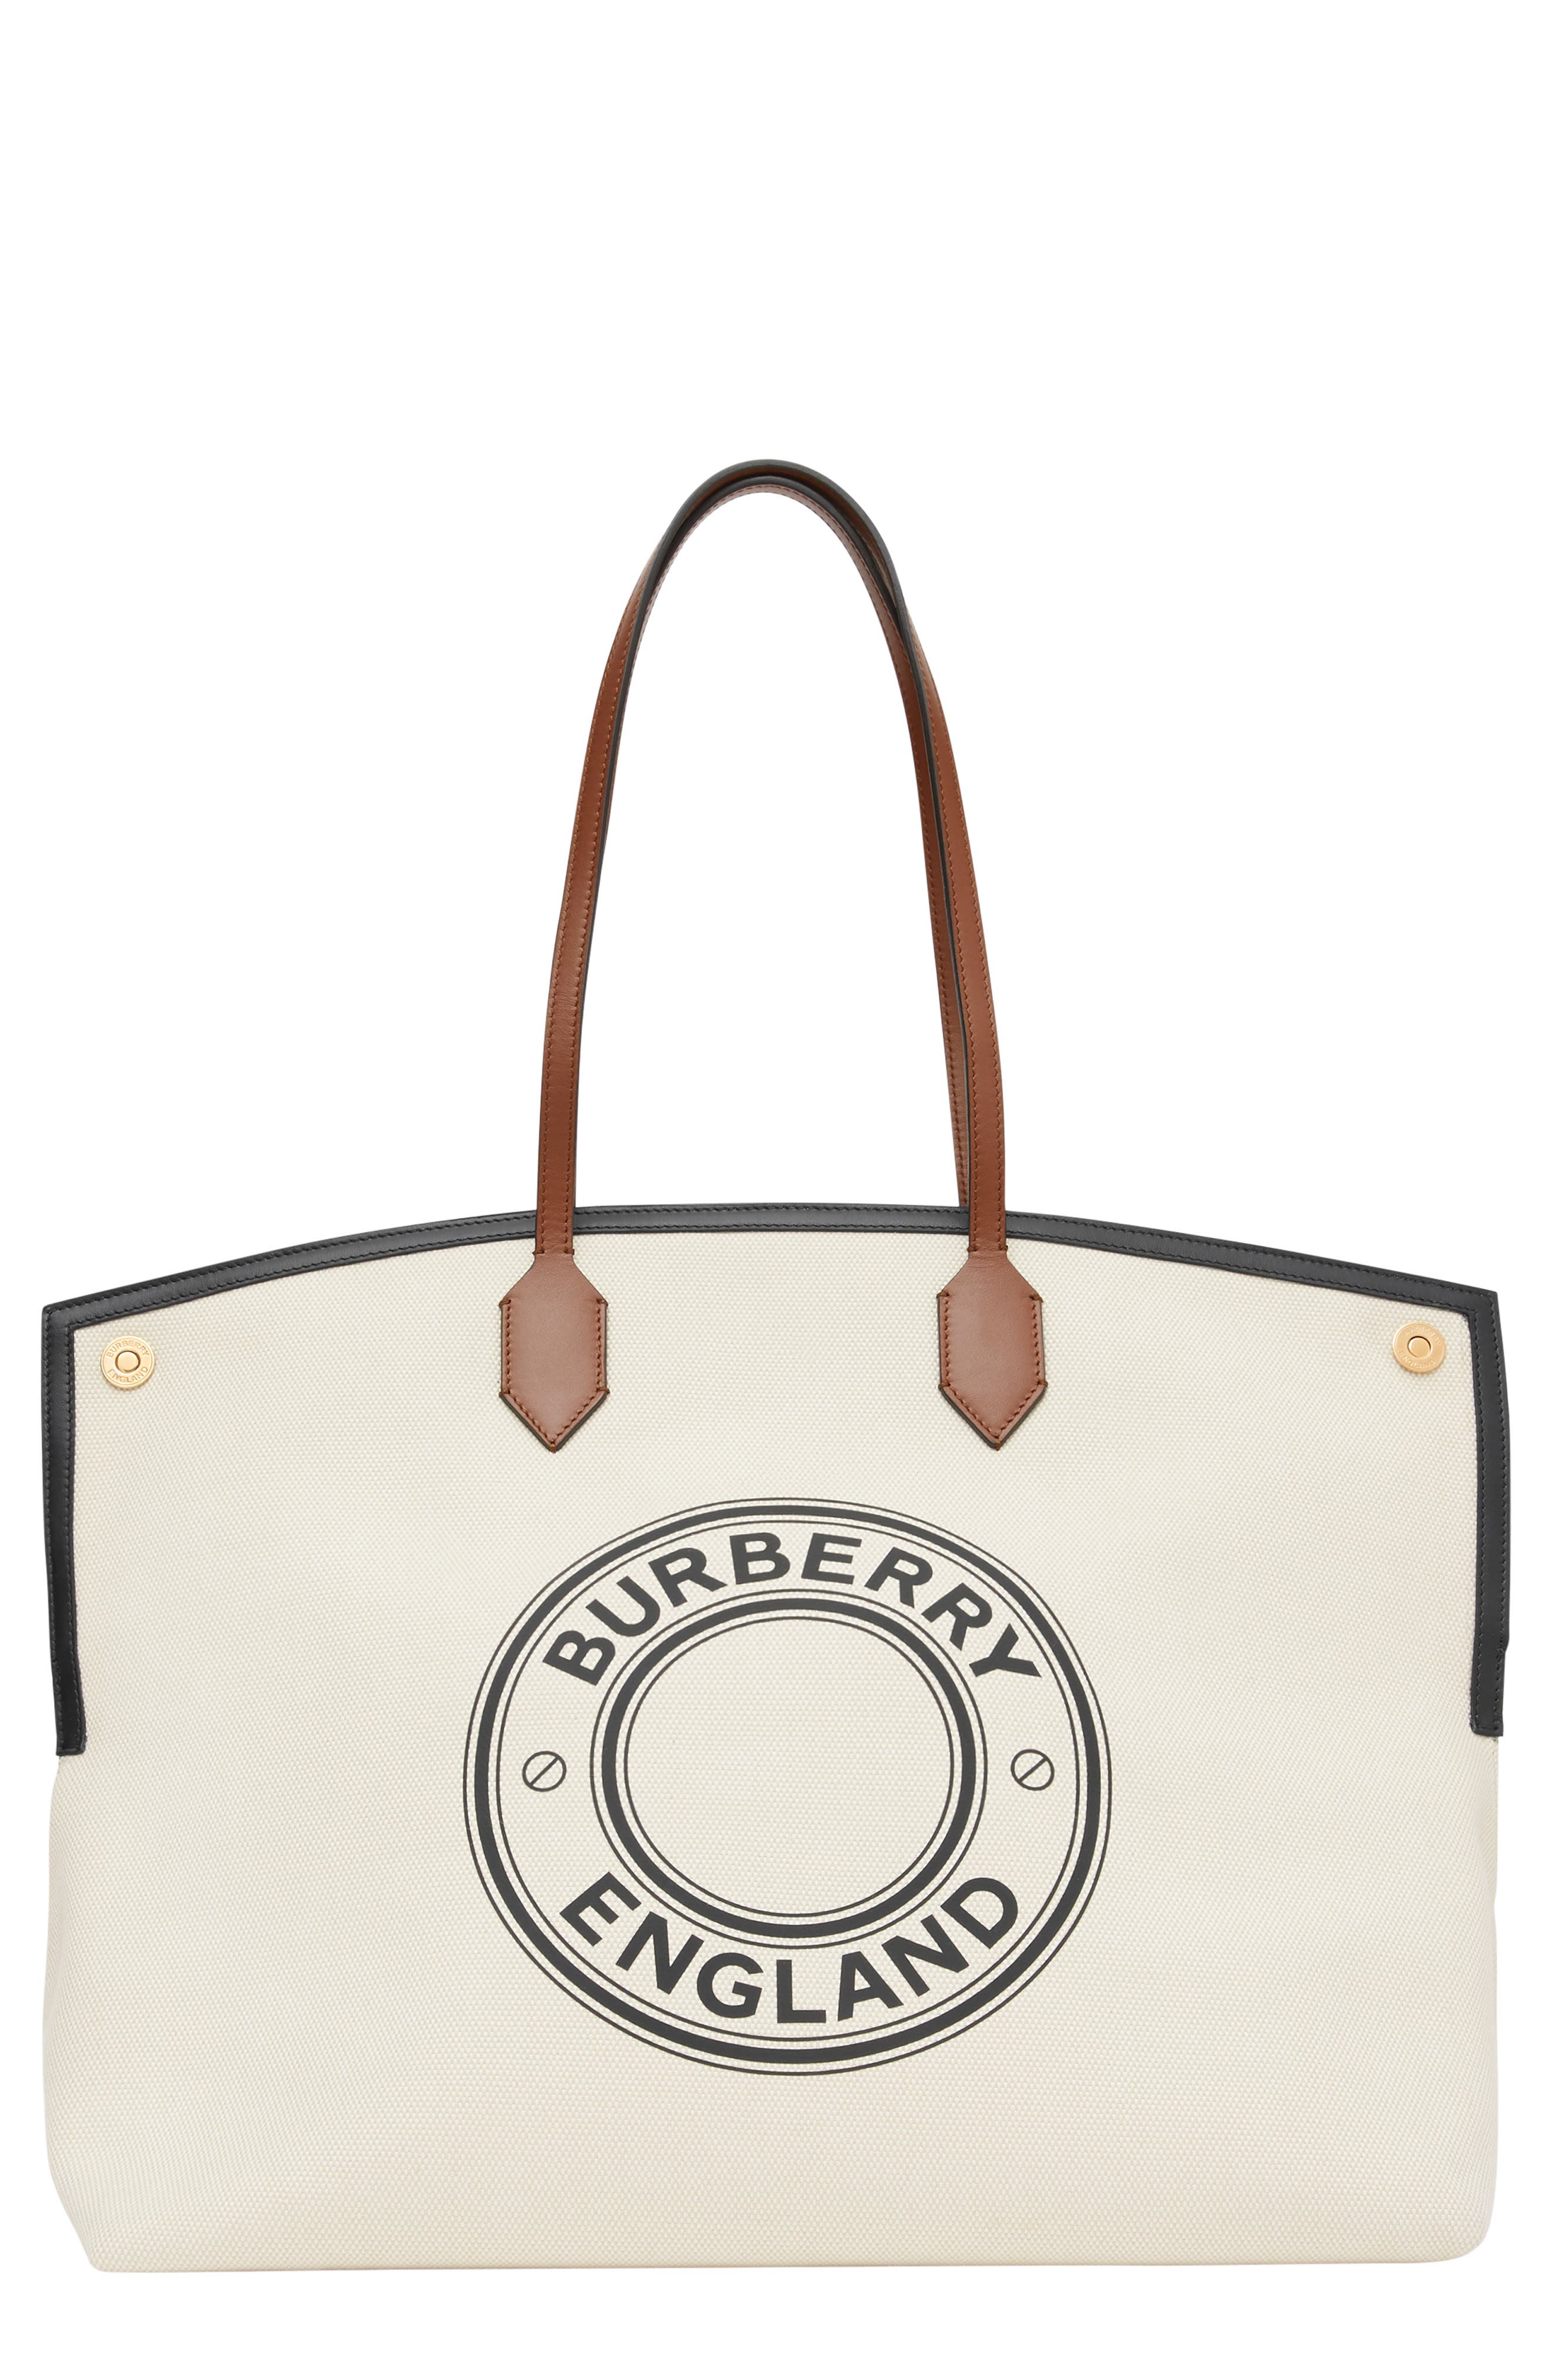 burberry handbags at nordstrom